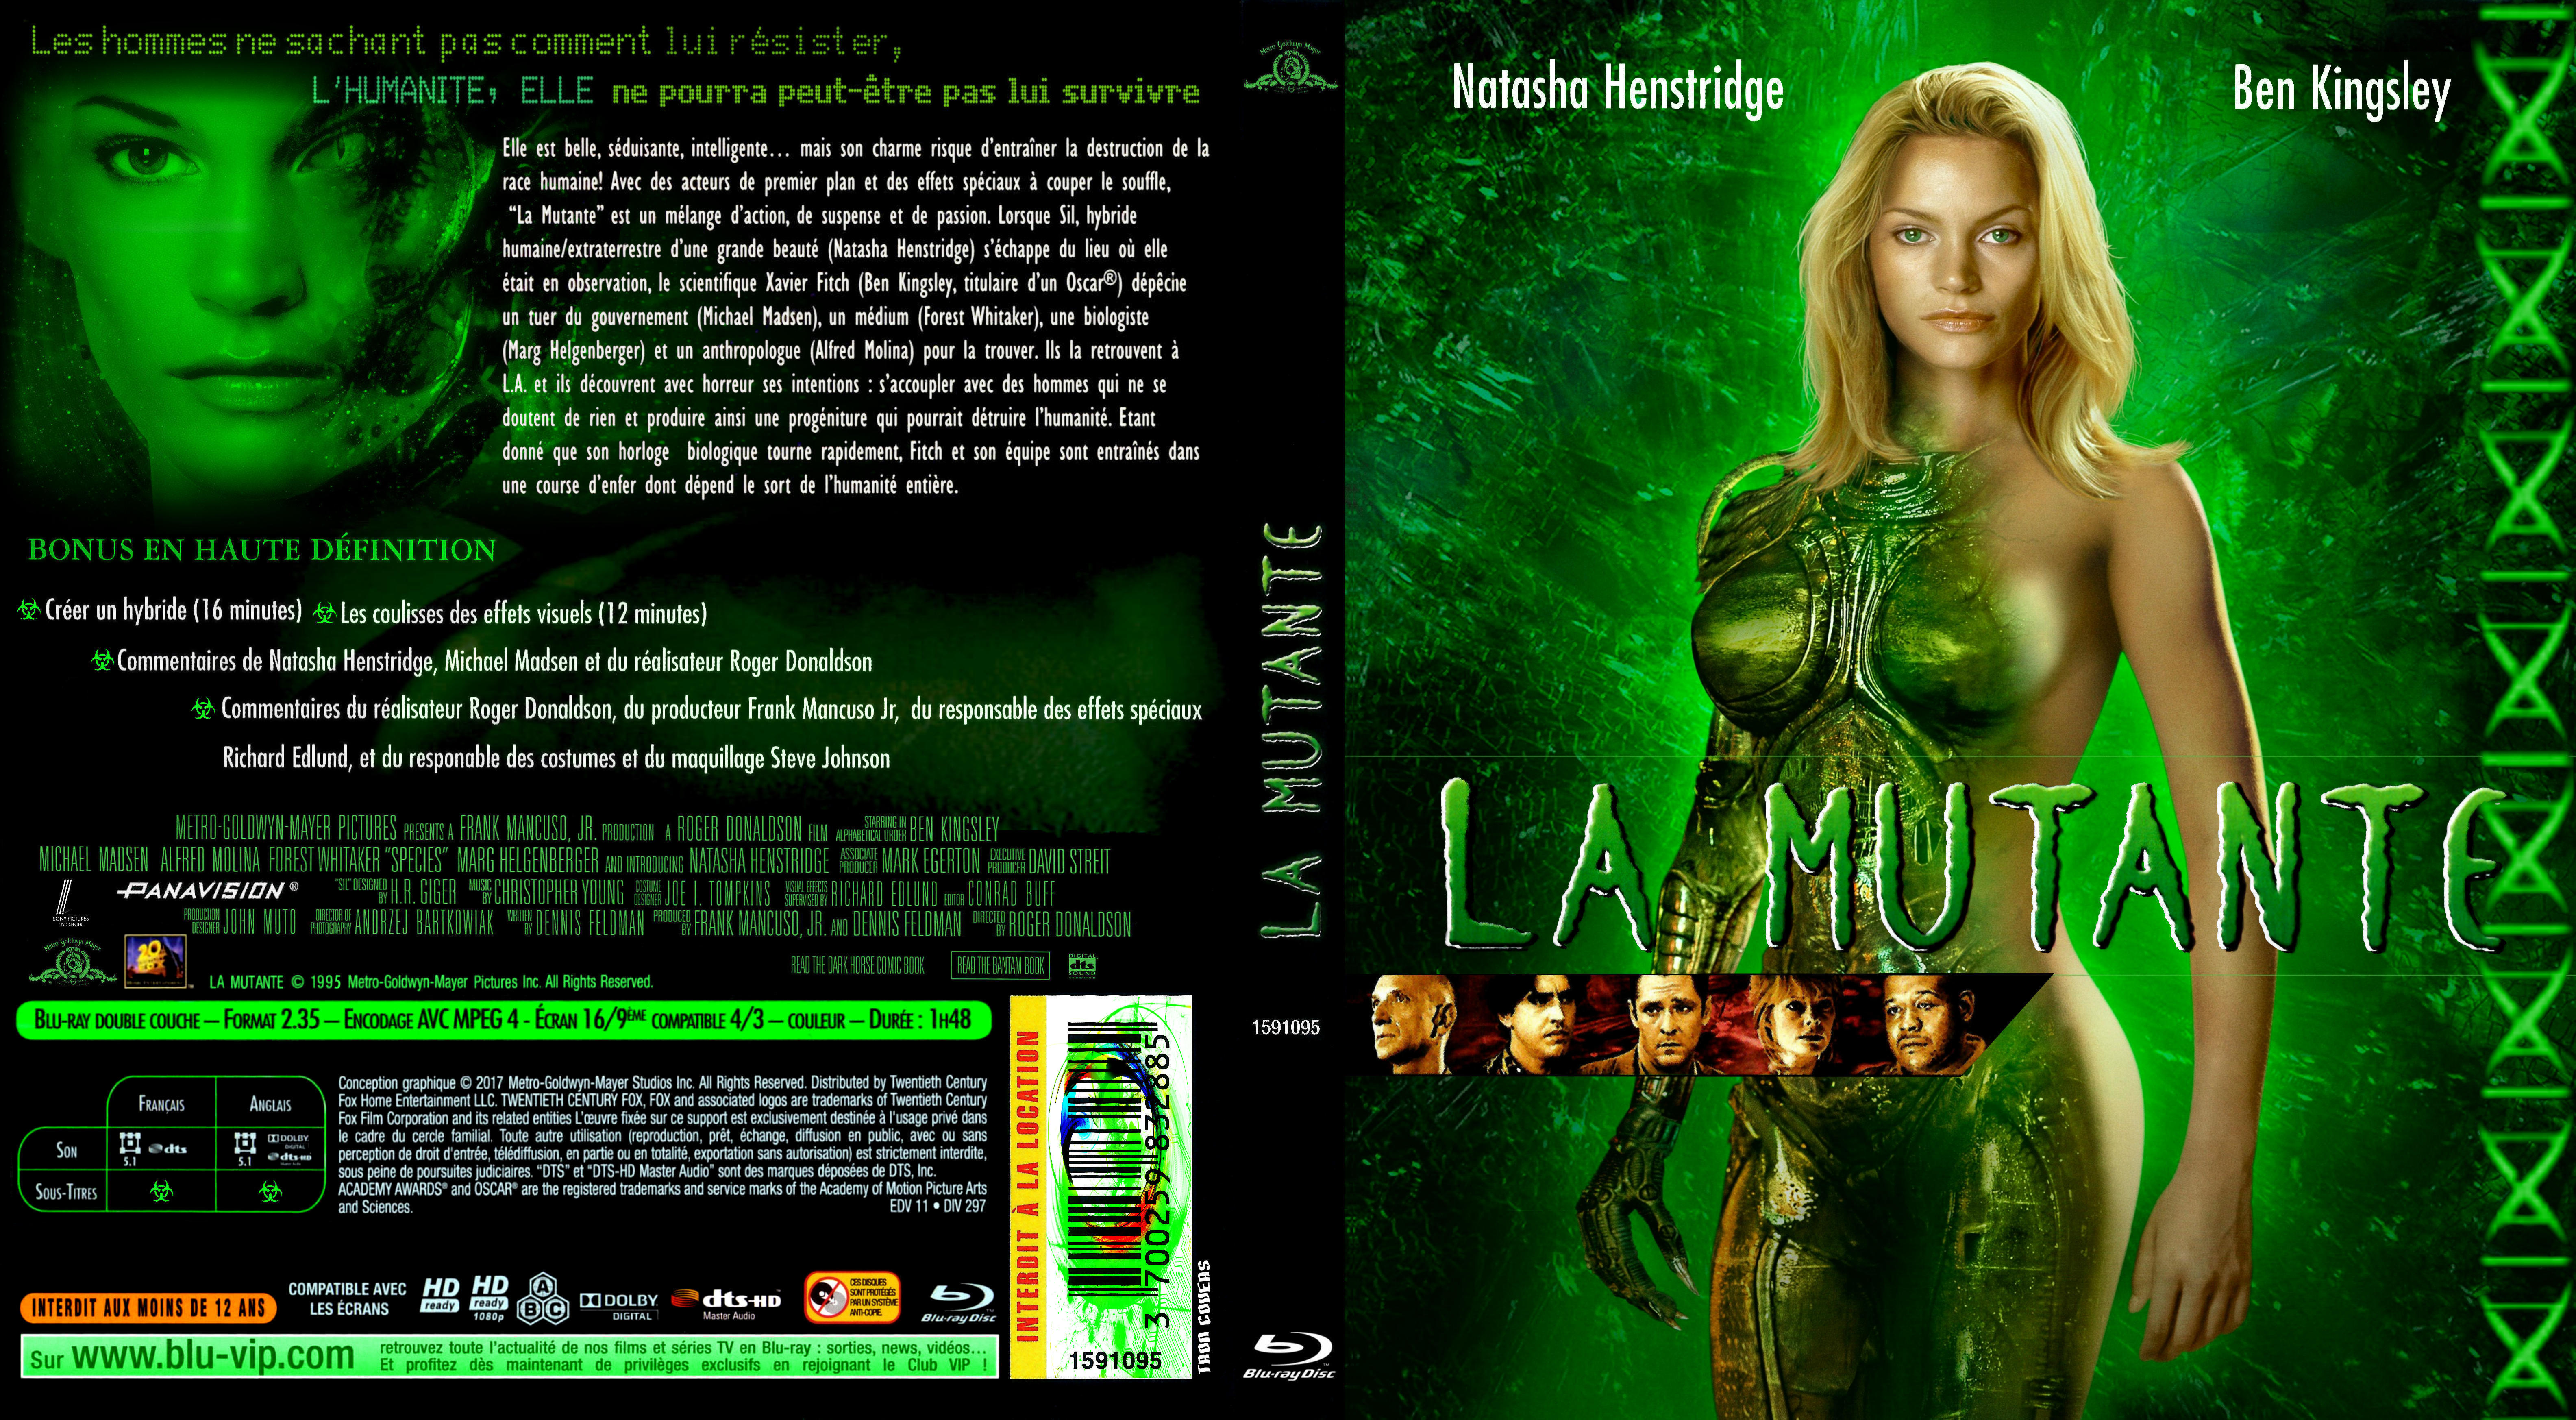 Jaquette DVD La mutante custom (BLU-RAY) v2